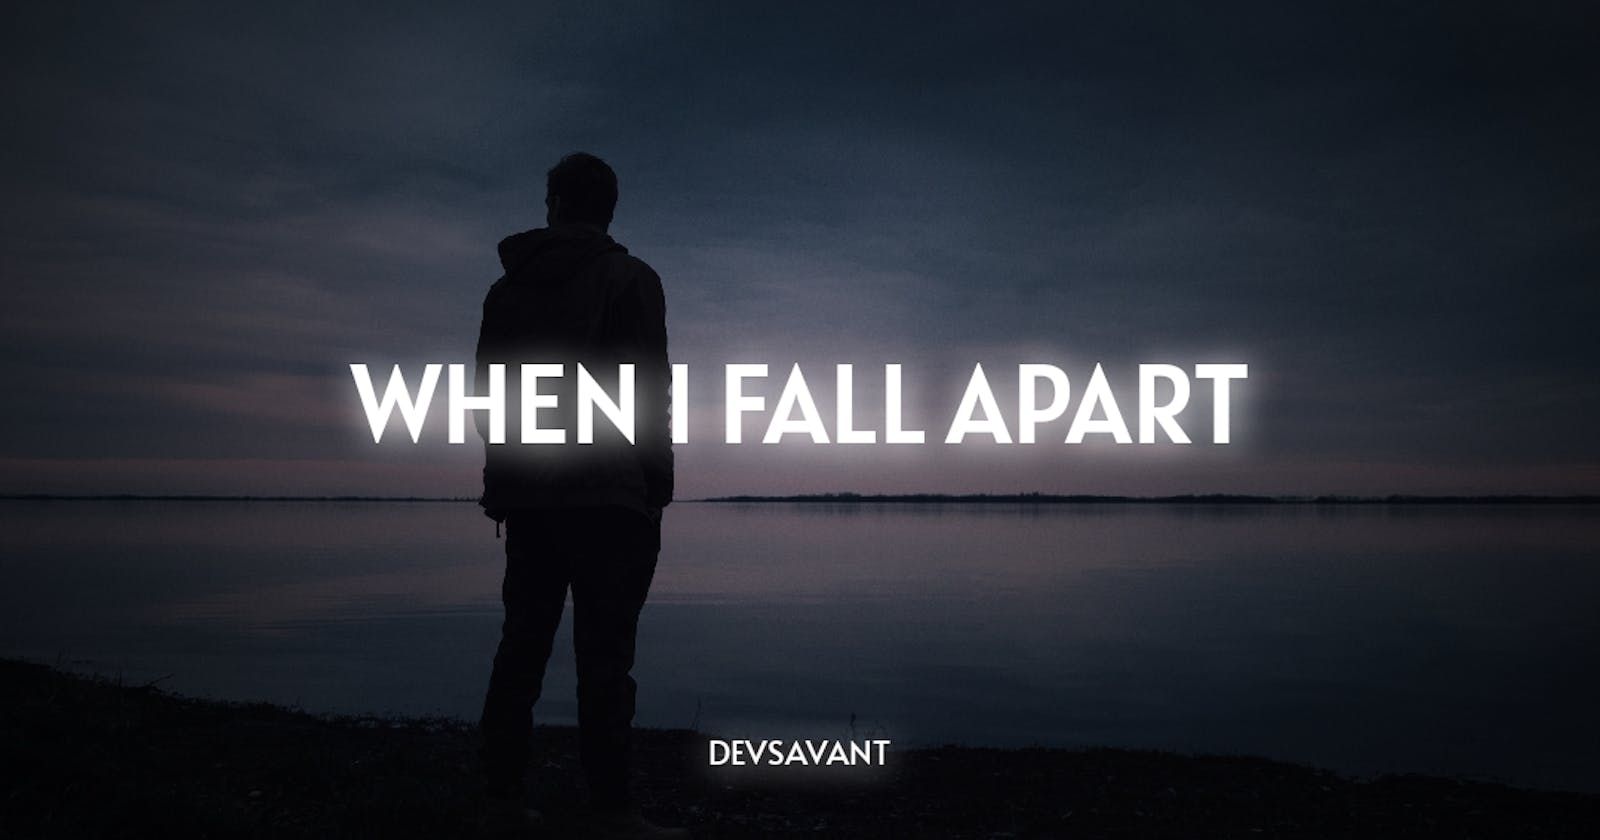 When i fall apart...